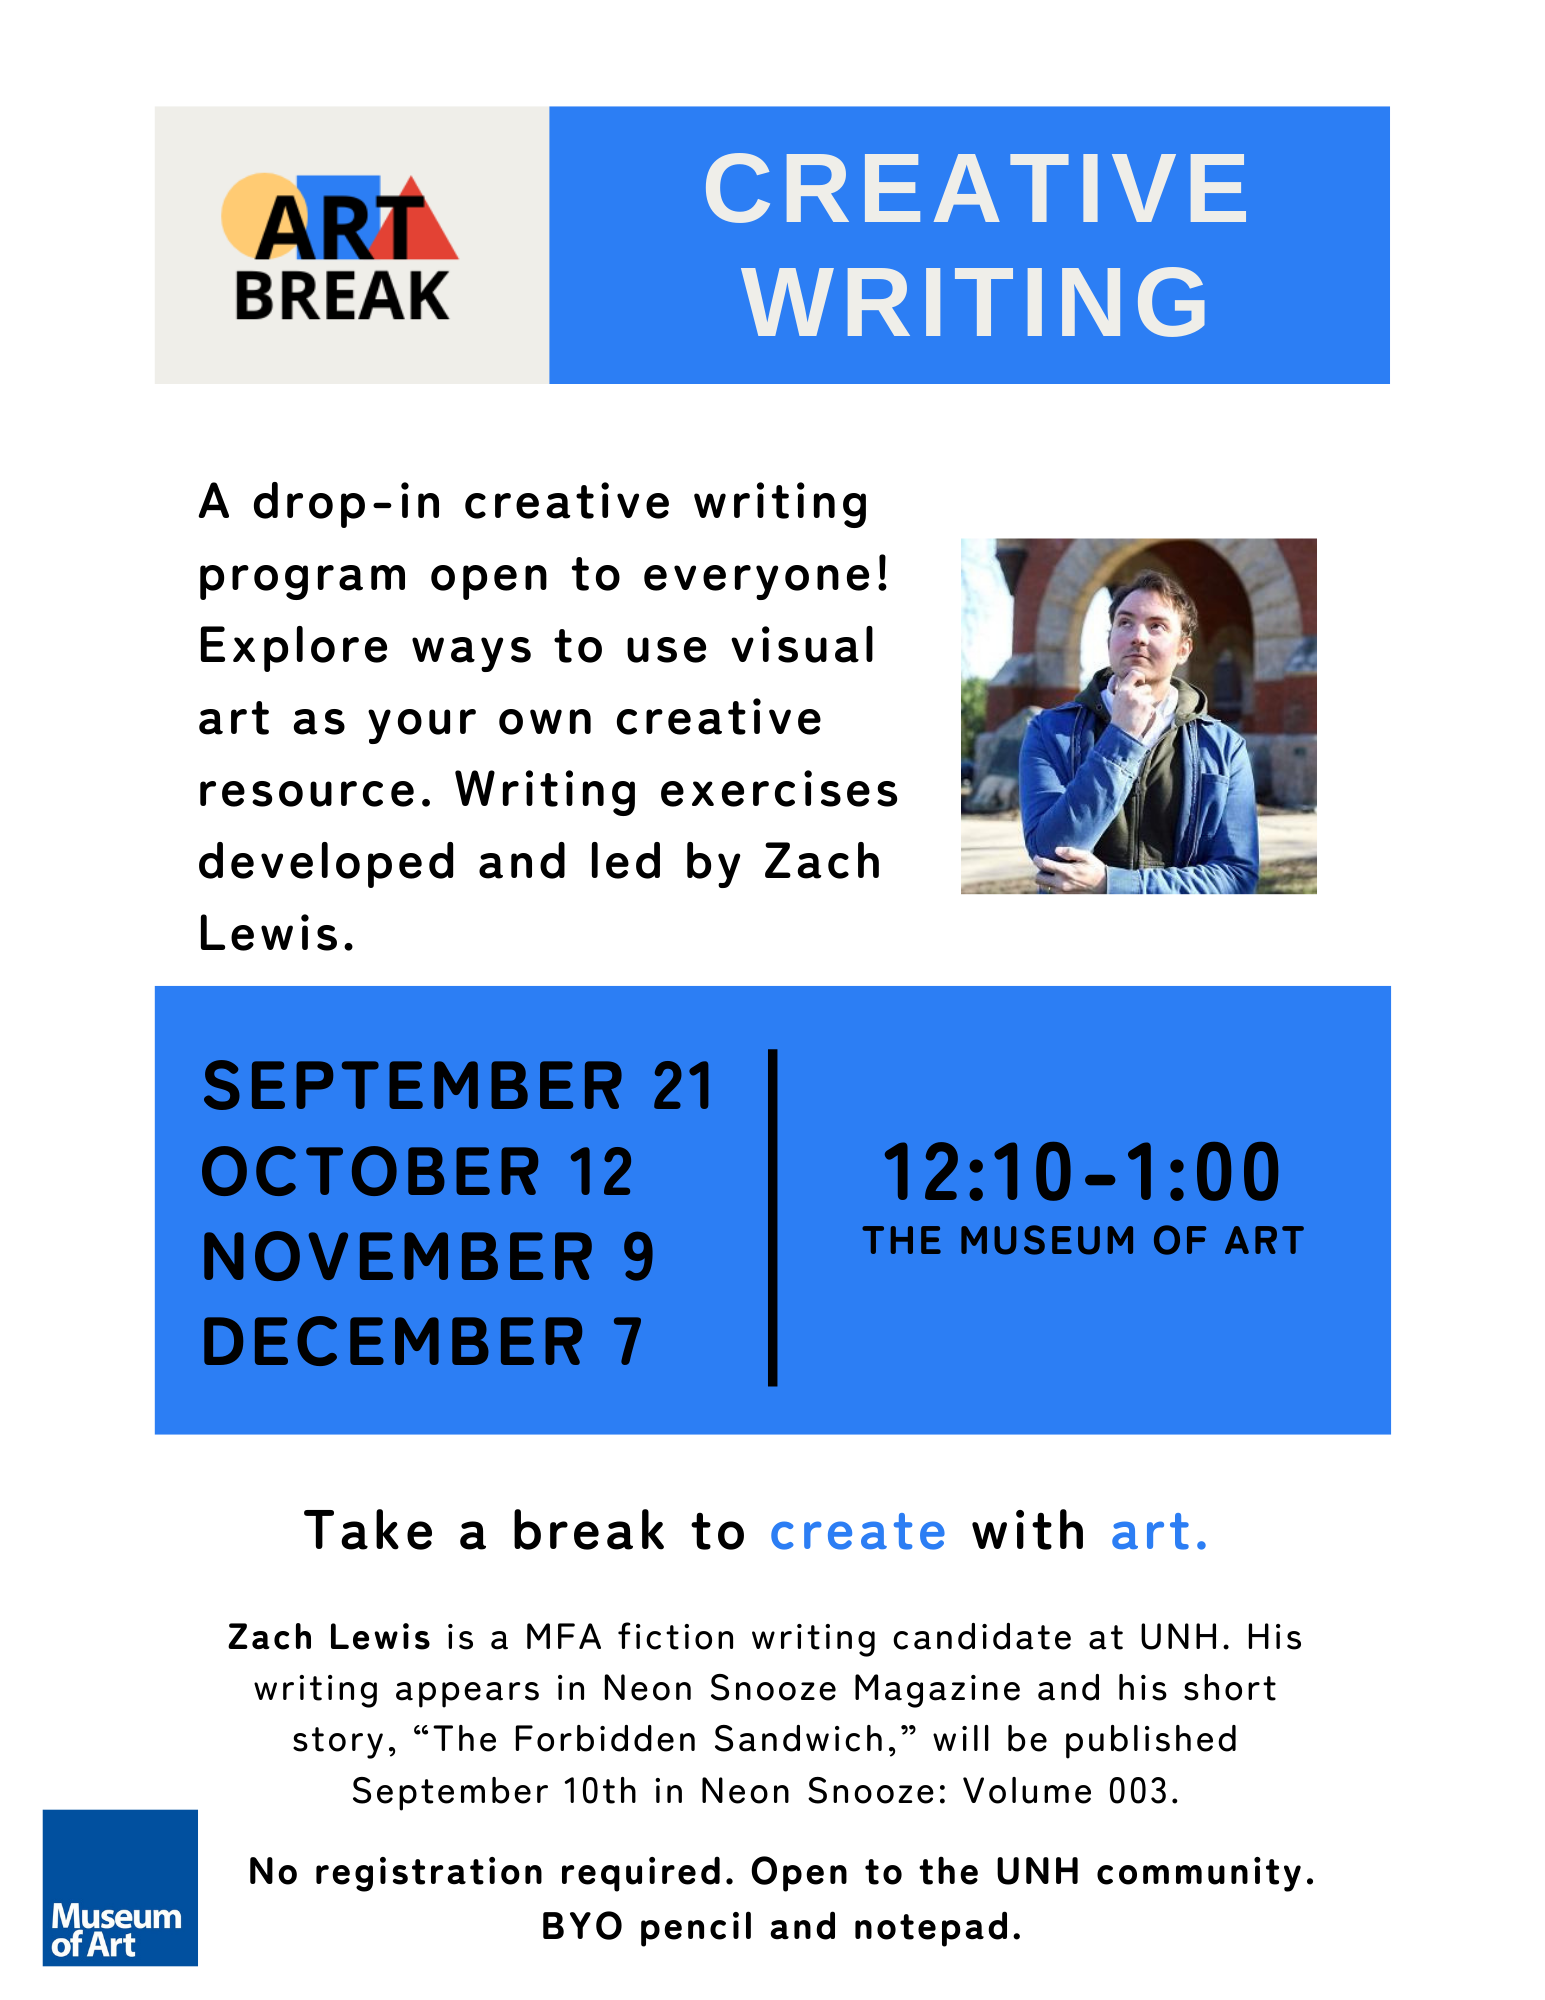 Art Break: Creative Writing in the Museum of Art image.